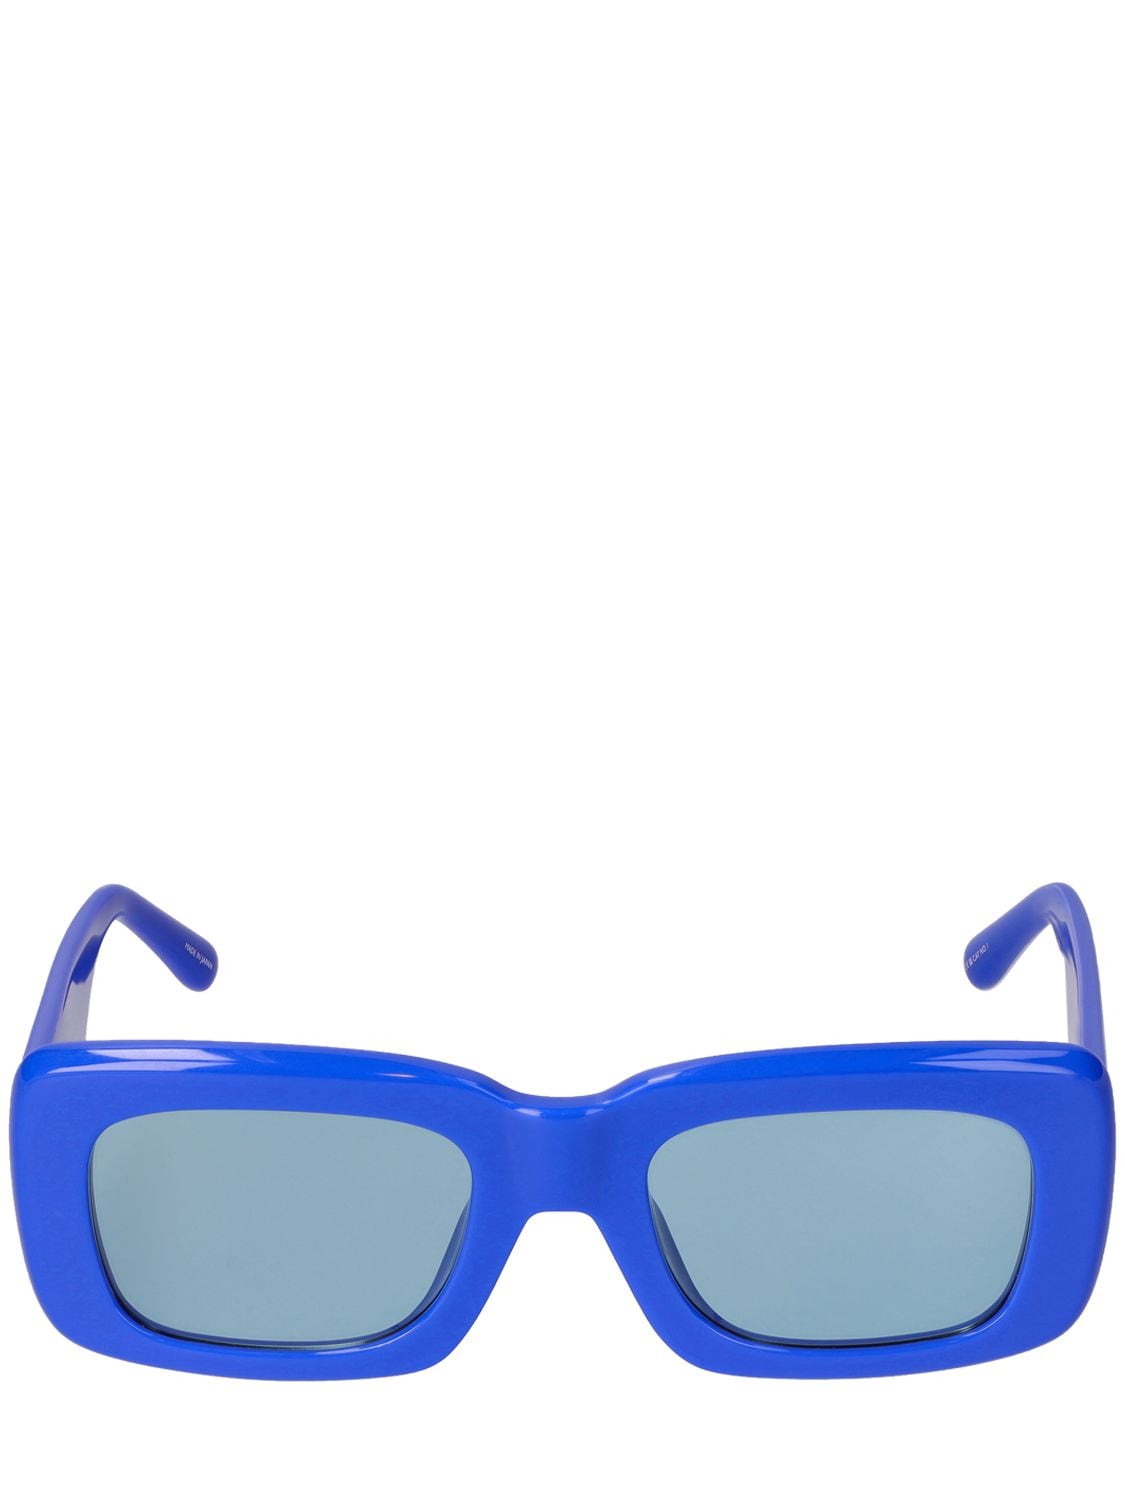 THE ATTICO Marfa Squared Acetate Sunglasses